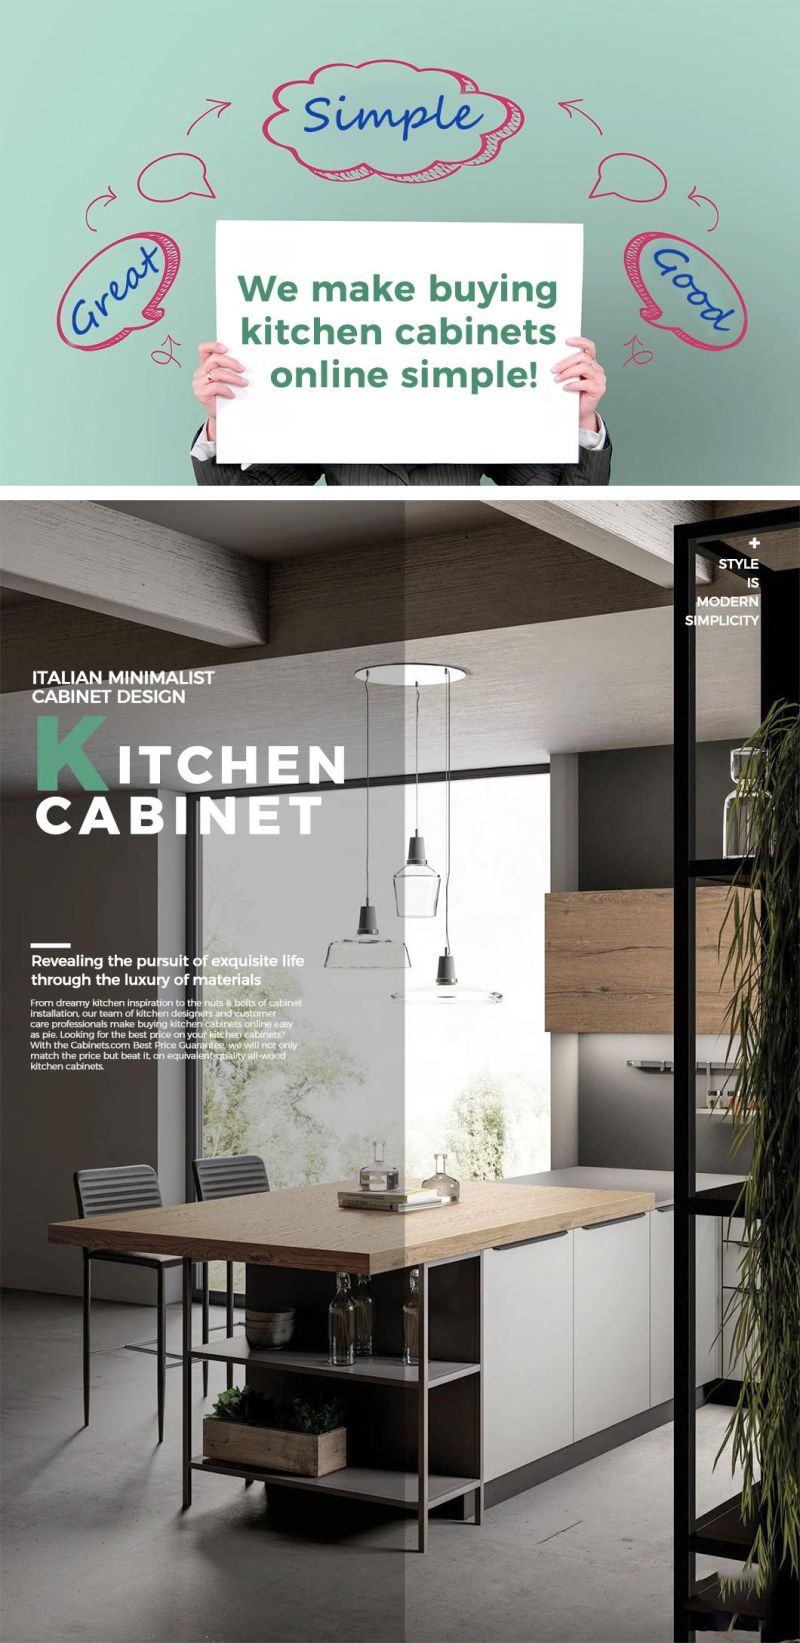 Home Designs Kitchen Furniture Floor Mounted Kitchen Storage Wall Hung Shaker Door Kitchen Cabinets